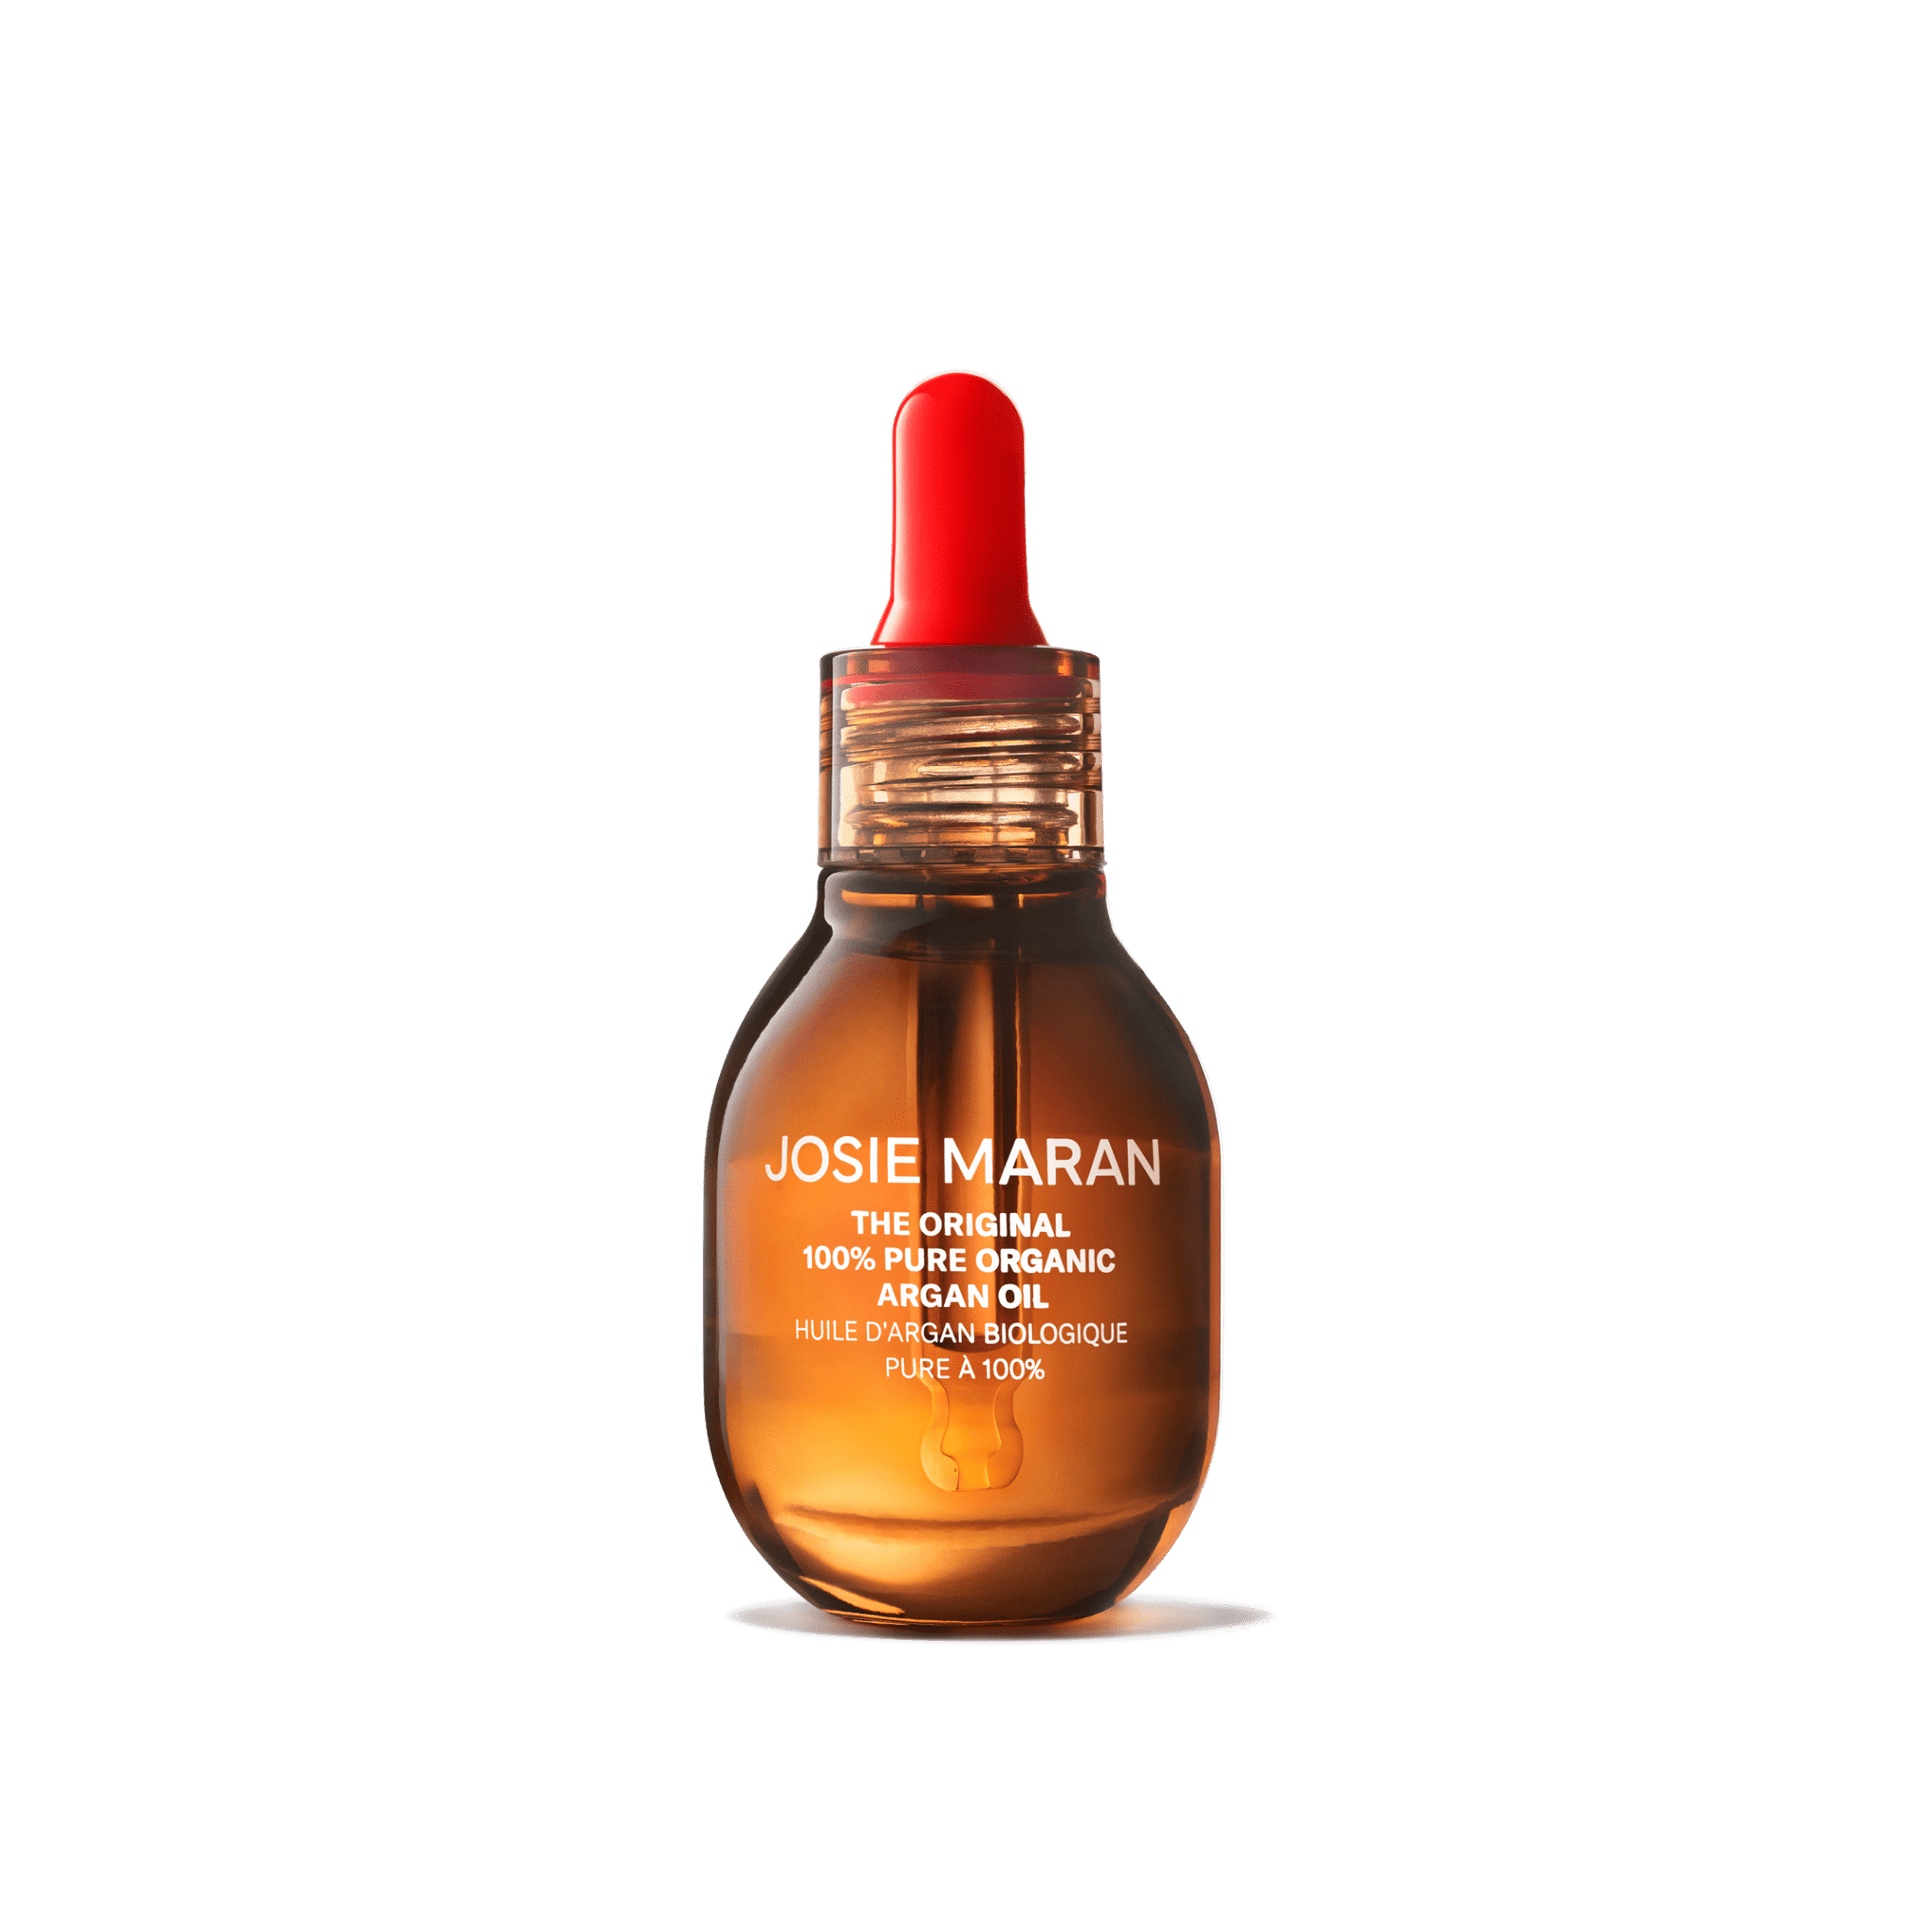 The Original 100% Pure Organic Argan Oil